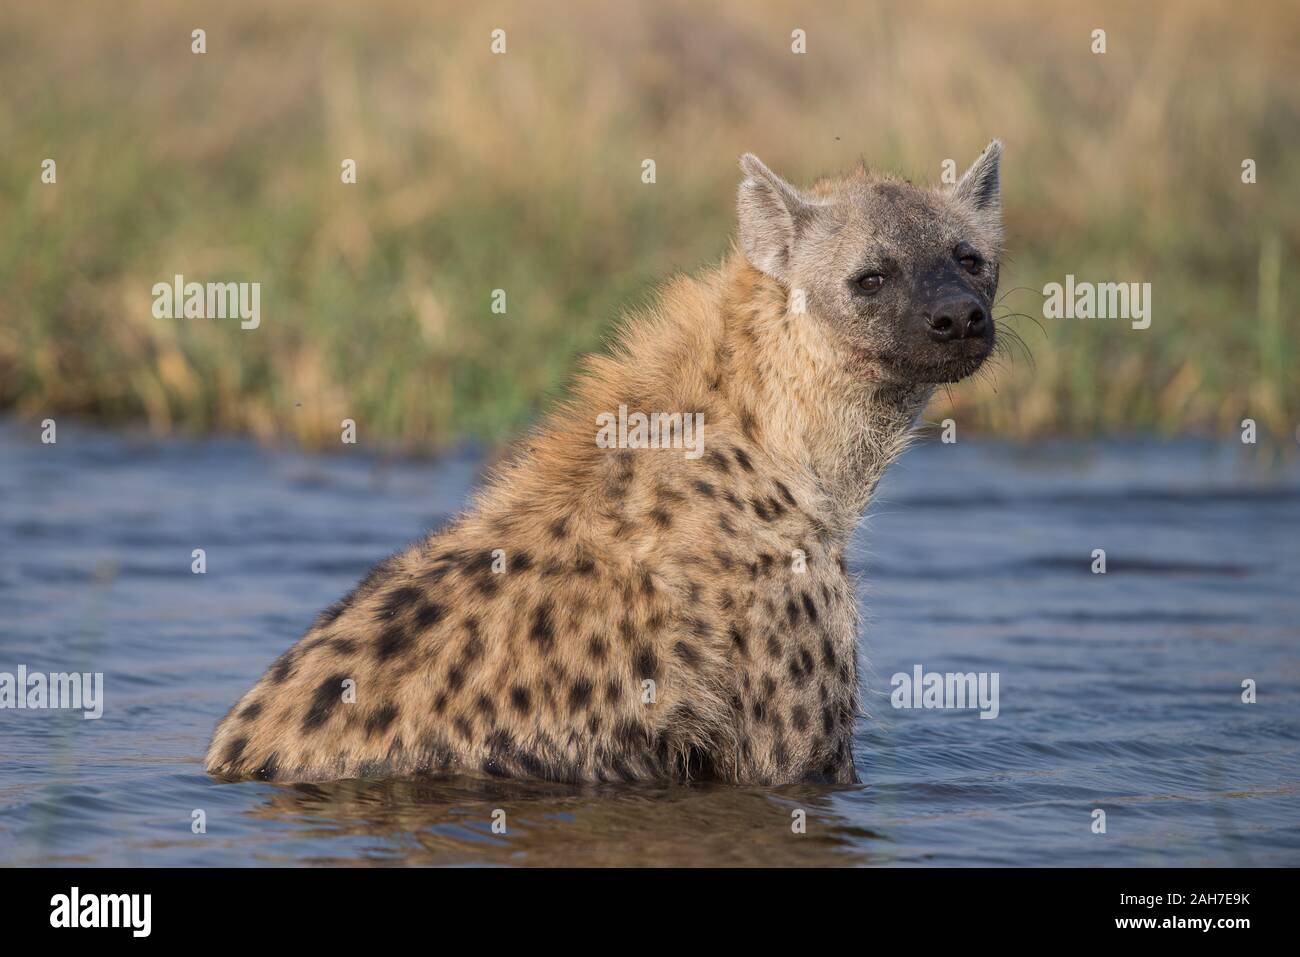 Hyena takiing a morning bath in Moremi NP (Khwai river), Botswana Stock Photo